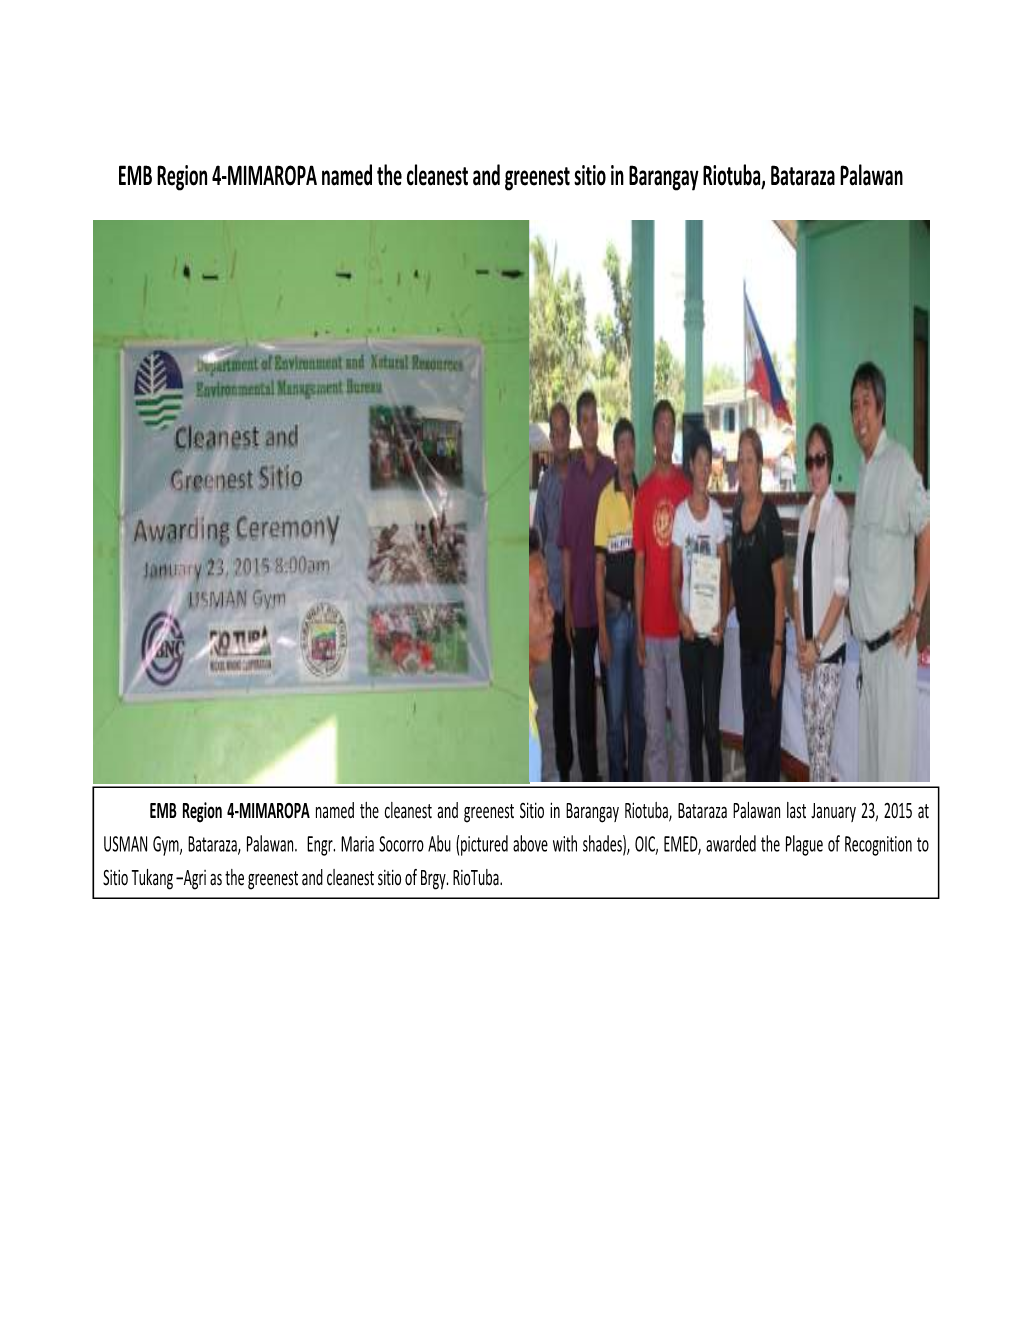 EMB Region 4-MIMAROPA Named the Cleanest and Greenest Sitio in Barangay Riotuba, Bataraza Palawan